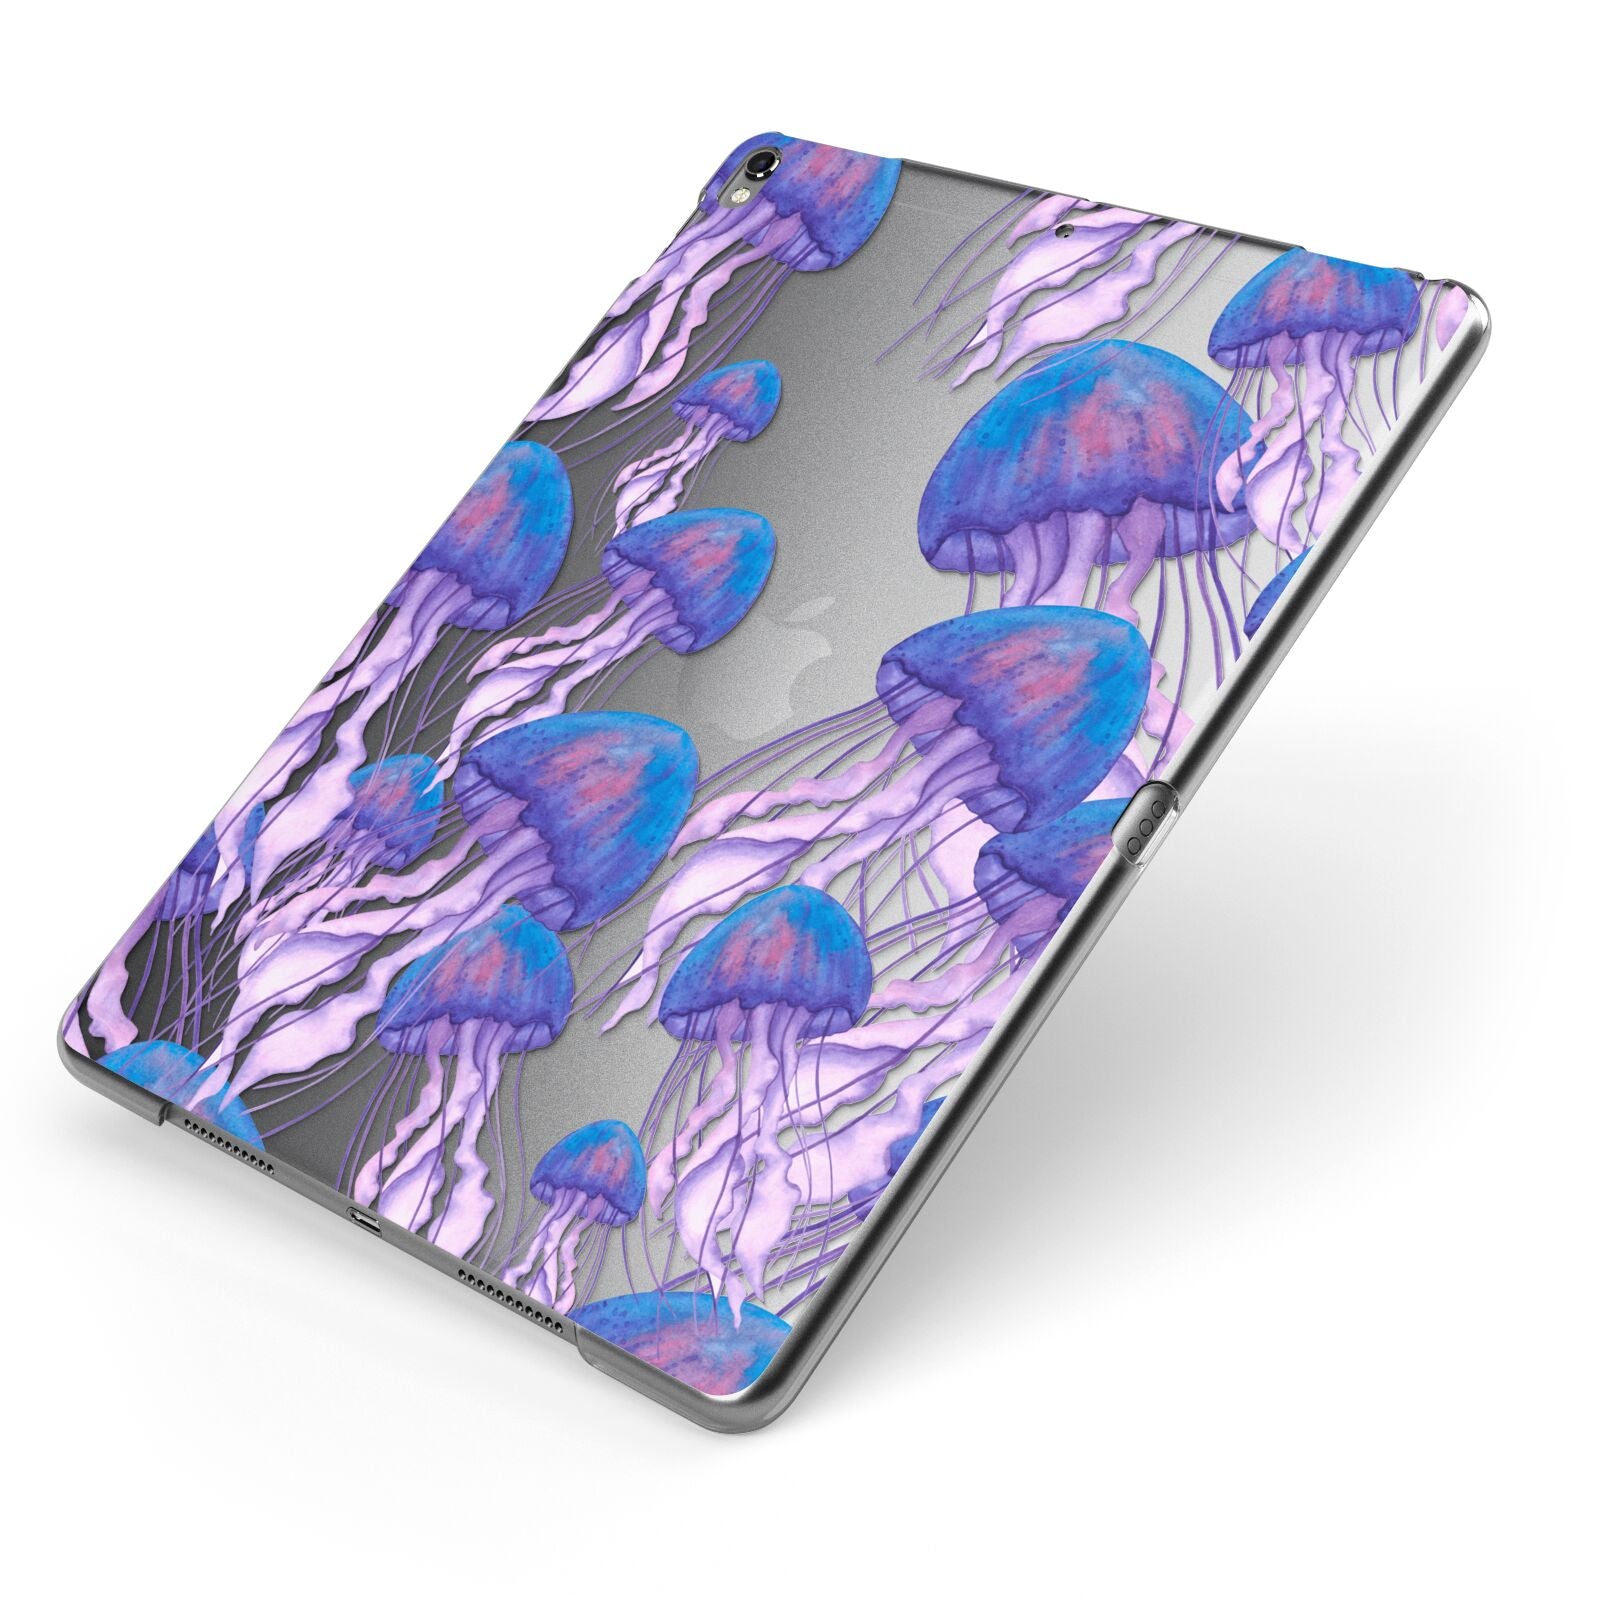 Jellyfish Apple iPad Case on Grey iPad Side View